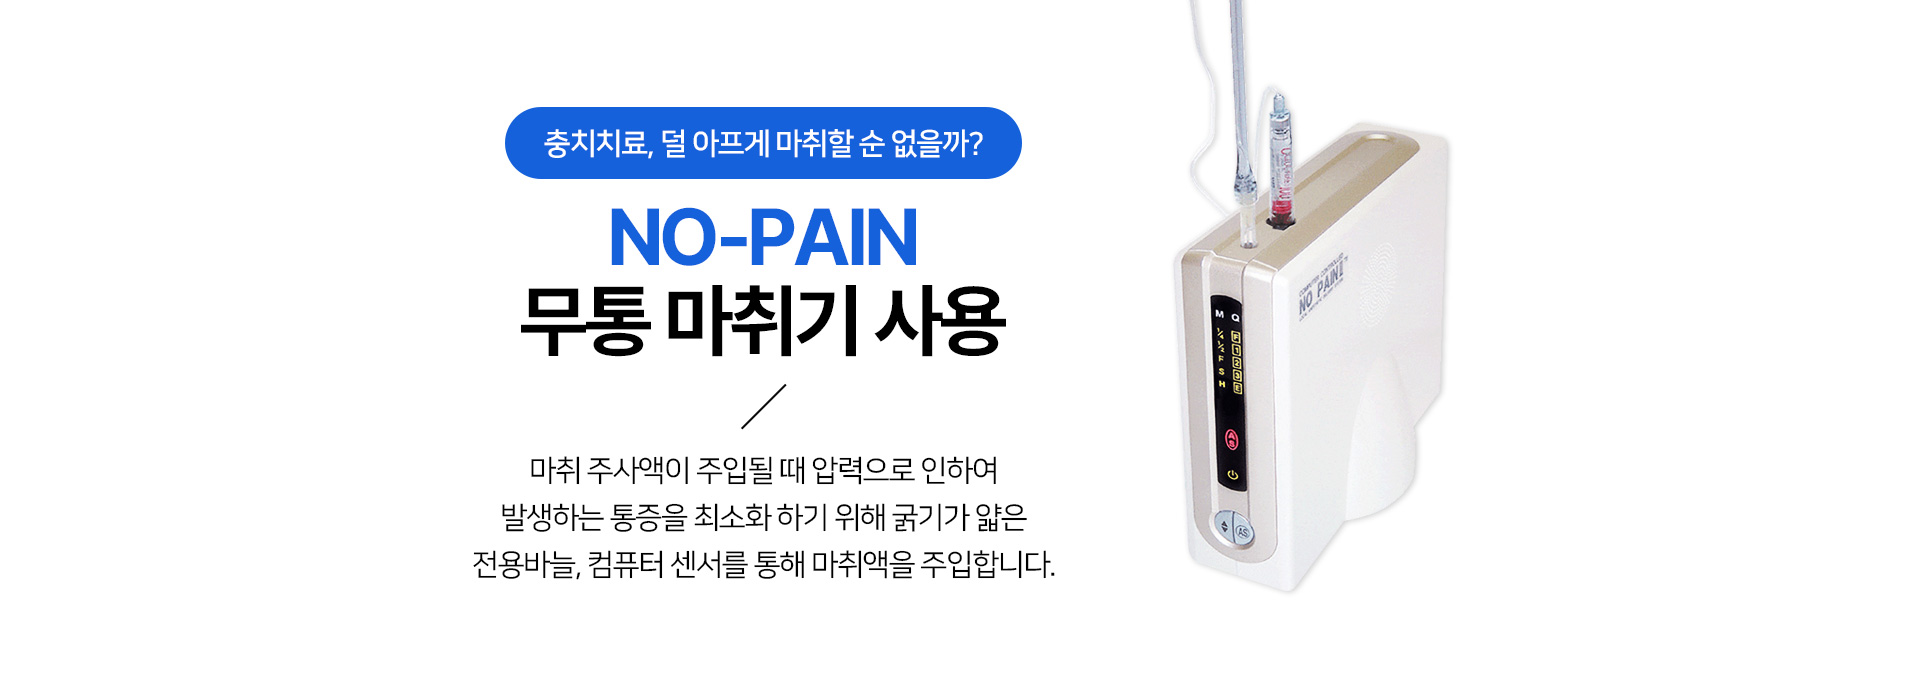 NO-PAIN 무통마취기 사용